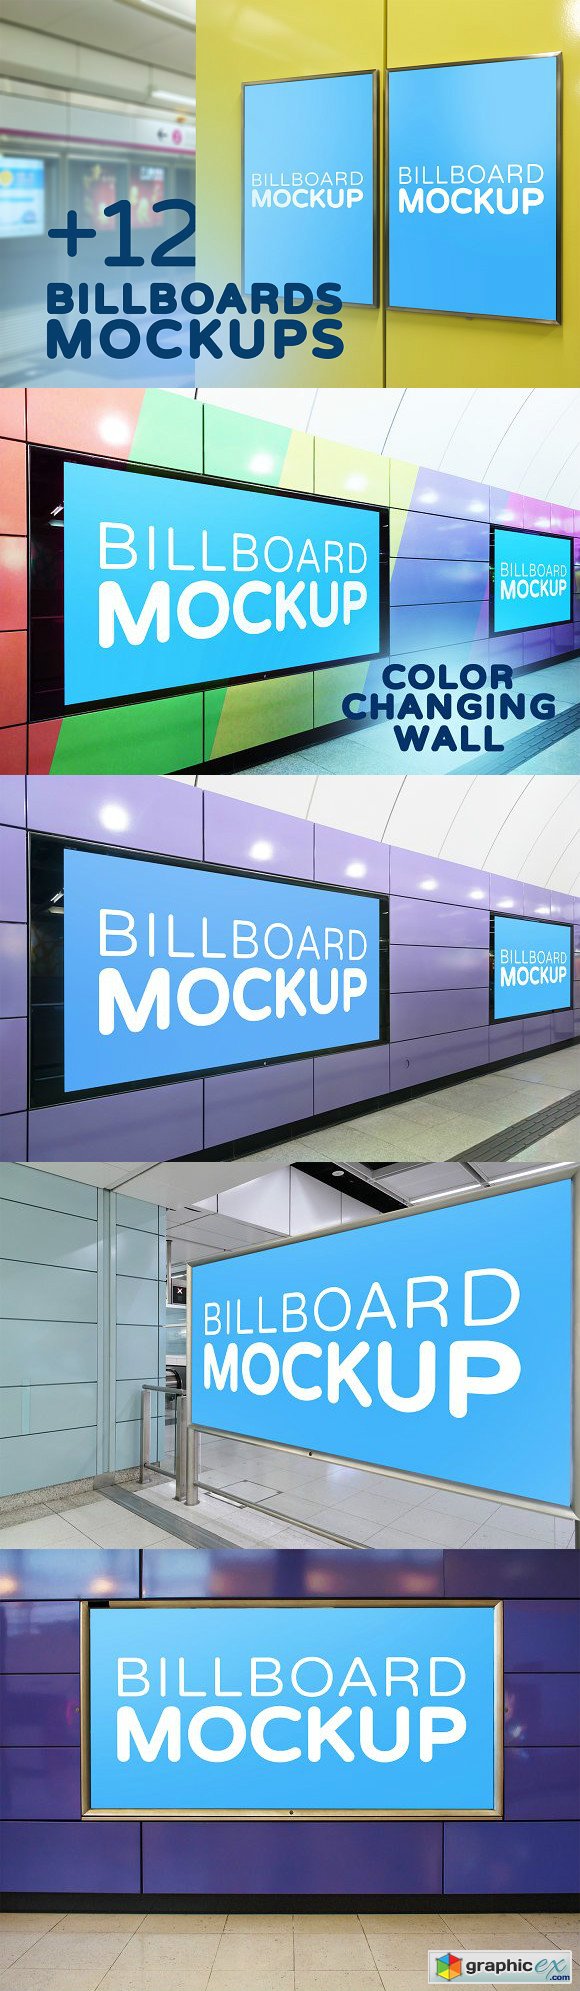 Subway Billboards Mockups Vol 1